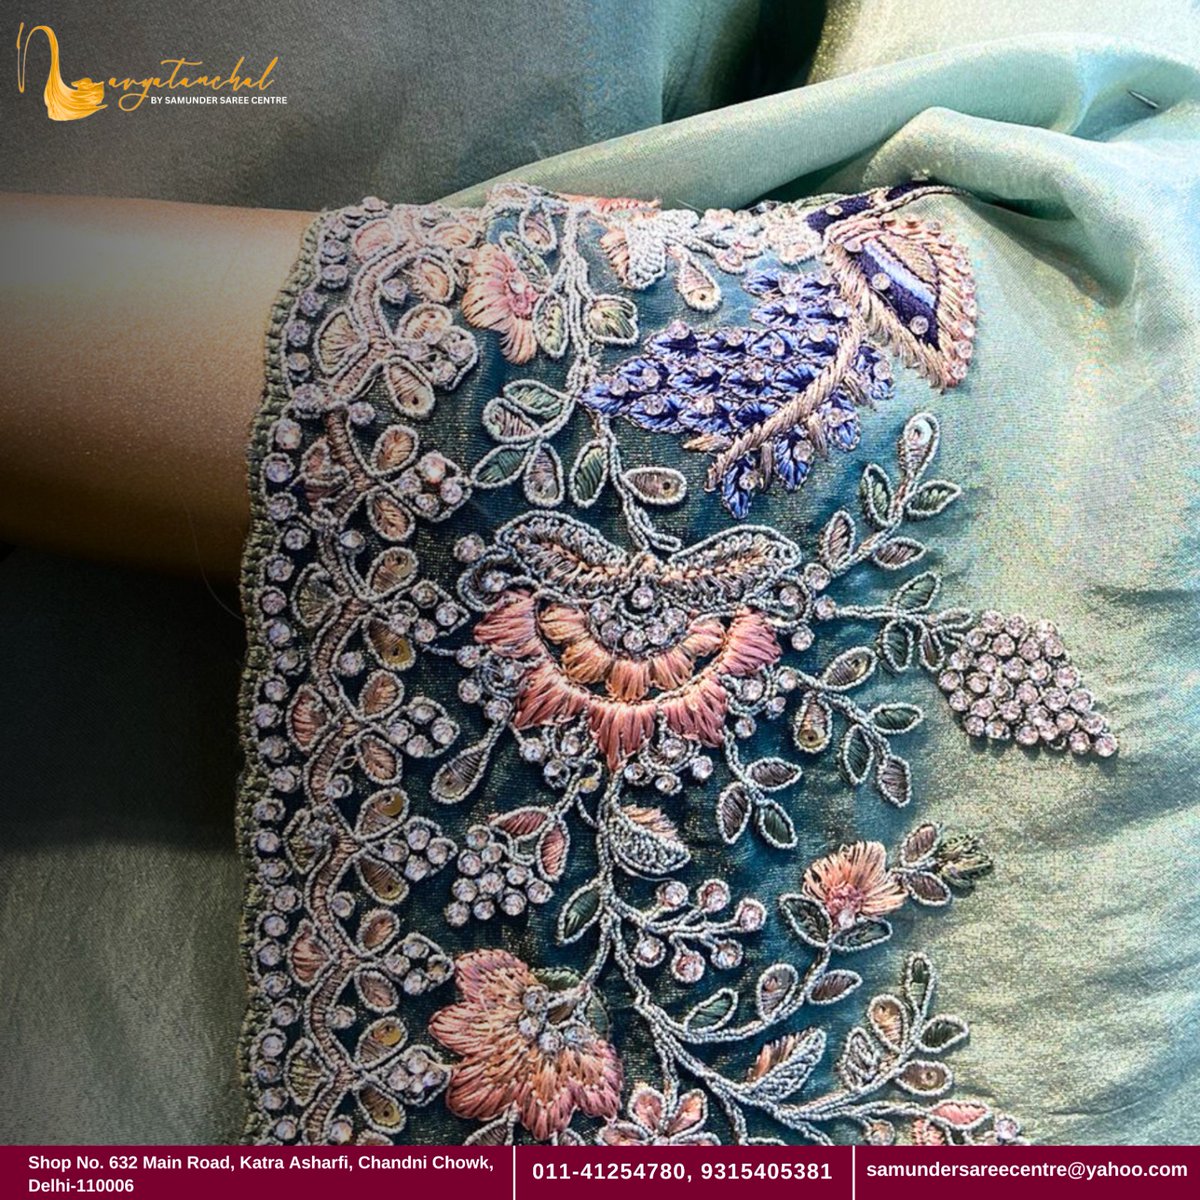 NAVYATANCHAL BY SAMUNDER SAREE
Silk Sarees - The Flawless Choice
.
.
📍Shop No. 632 Main Road, Katra Asharfi, Chandni Chowk, Delhi-110006
📞011-41254780, 9315405381
🌐samundersareecentre@yahoo.com
.
.
#bridal #fashion #sareestyle #samundersaree #gravwebsolution #newdesign